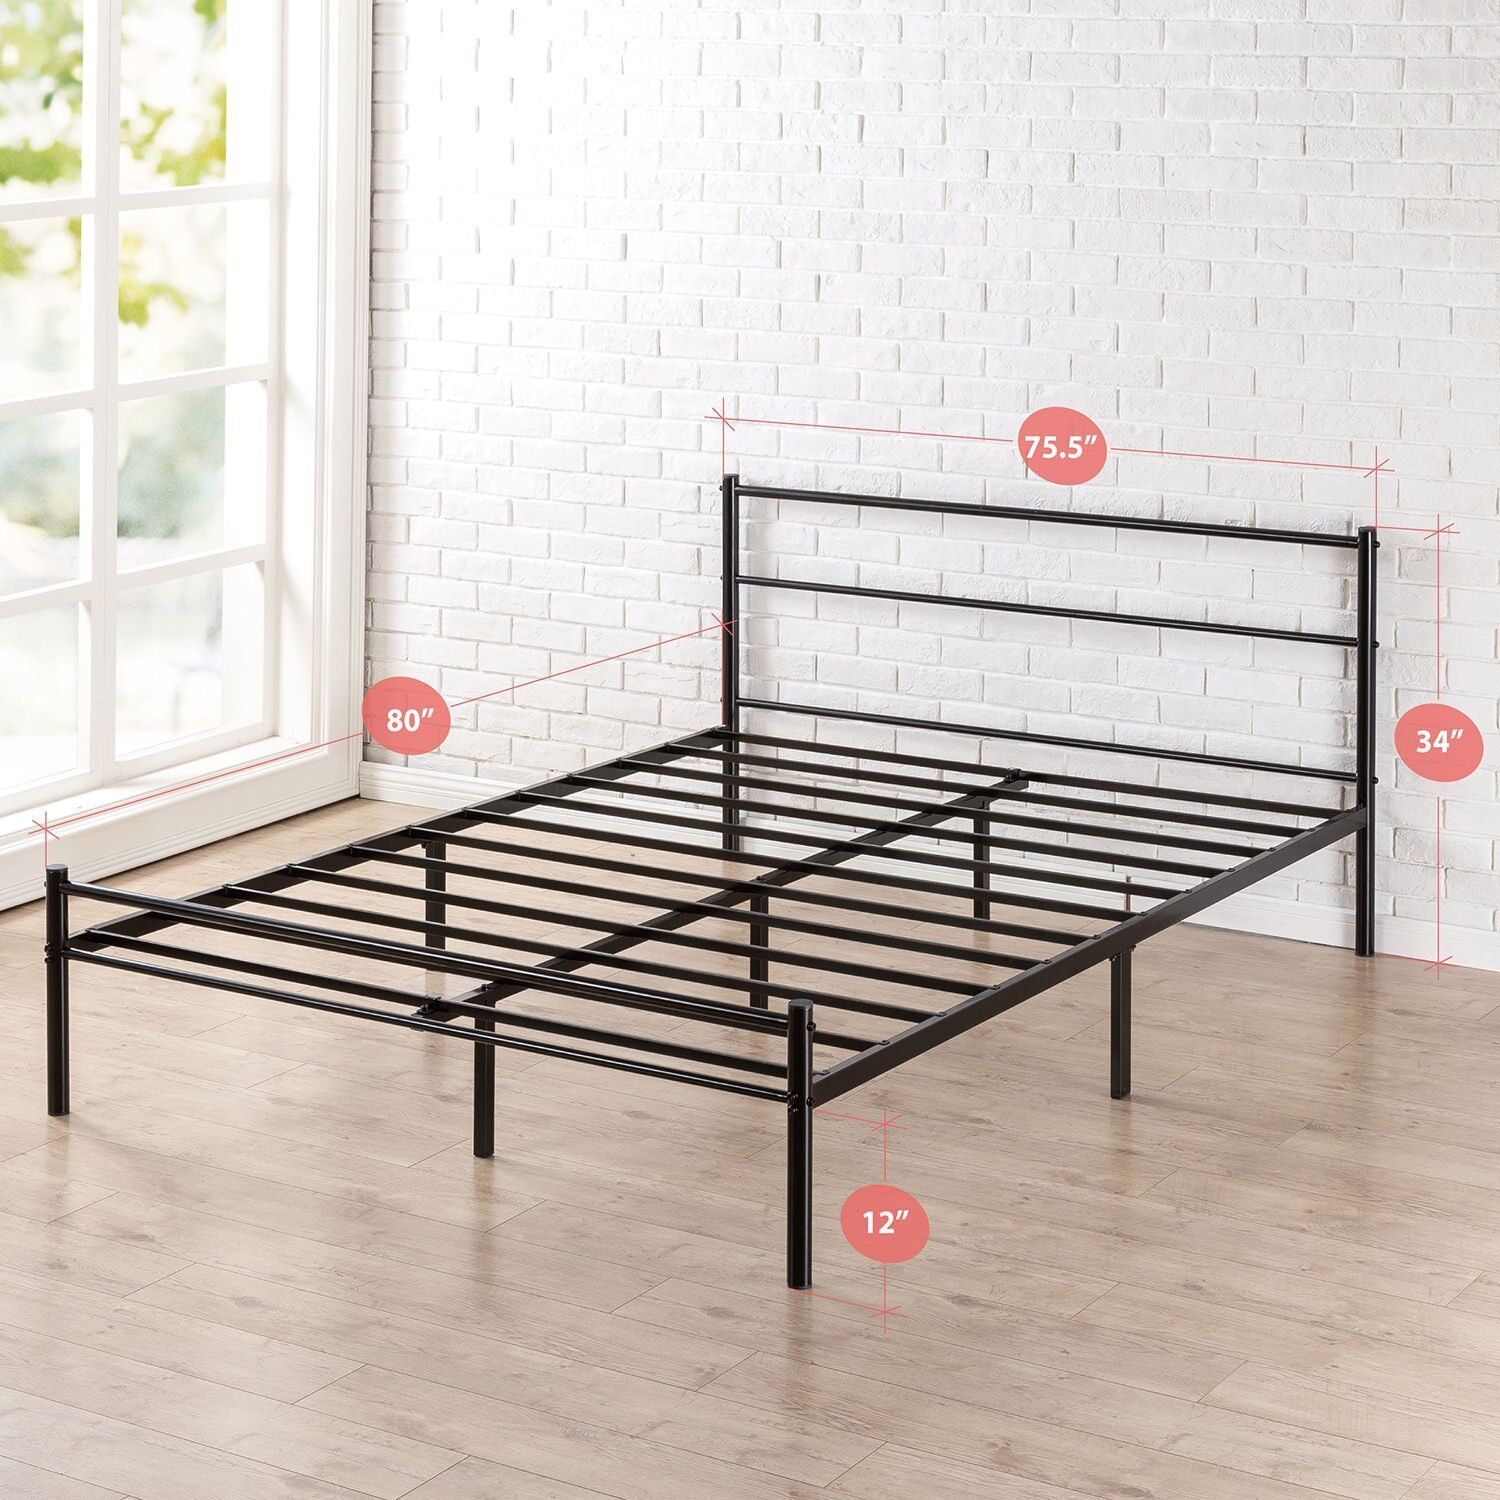 Zinus Black Metal Bed Frame Platform, Zinus Metal Bed Frame Review